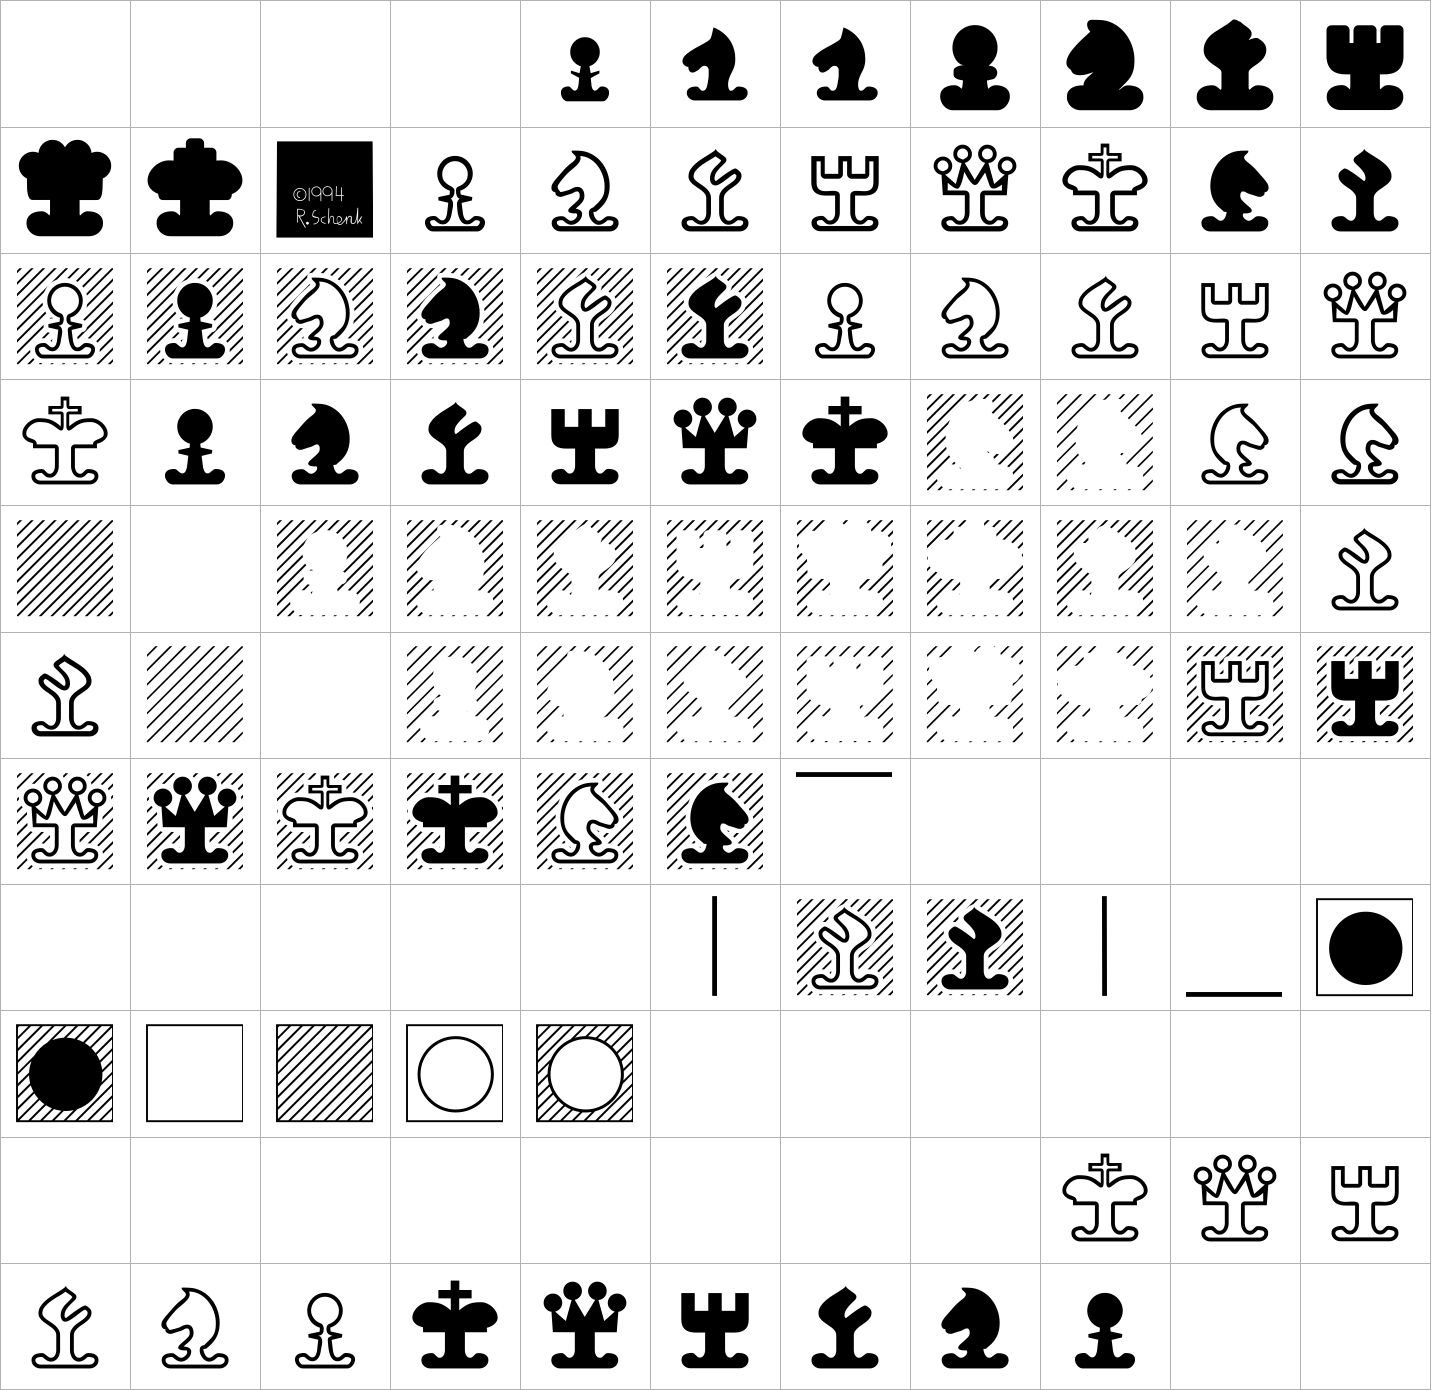 XSeeder Chess image